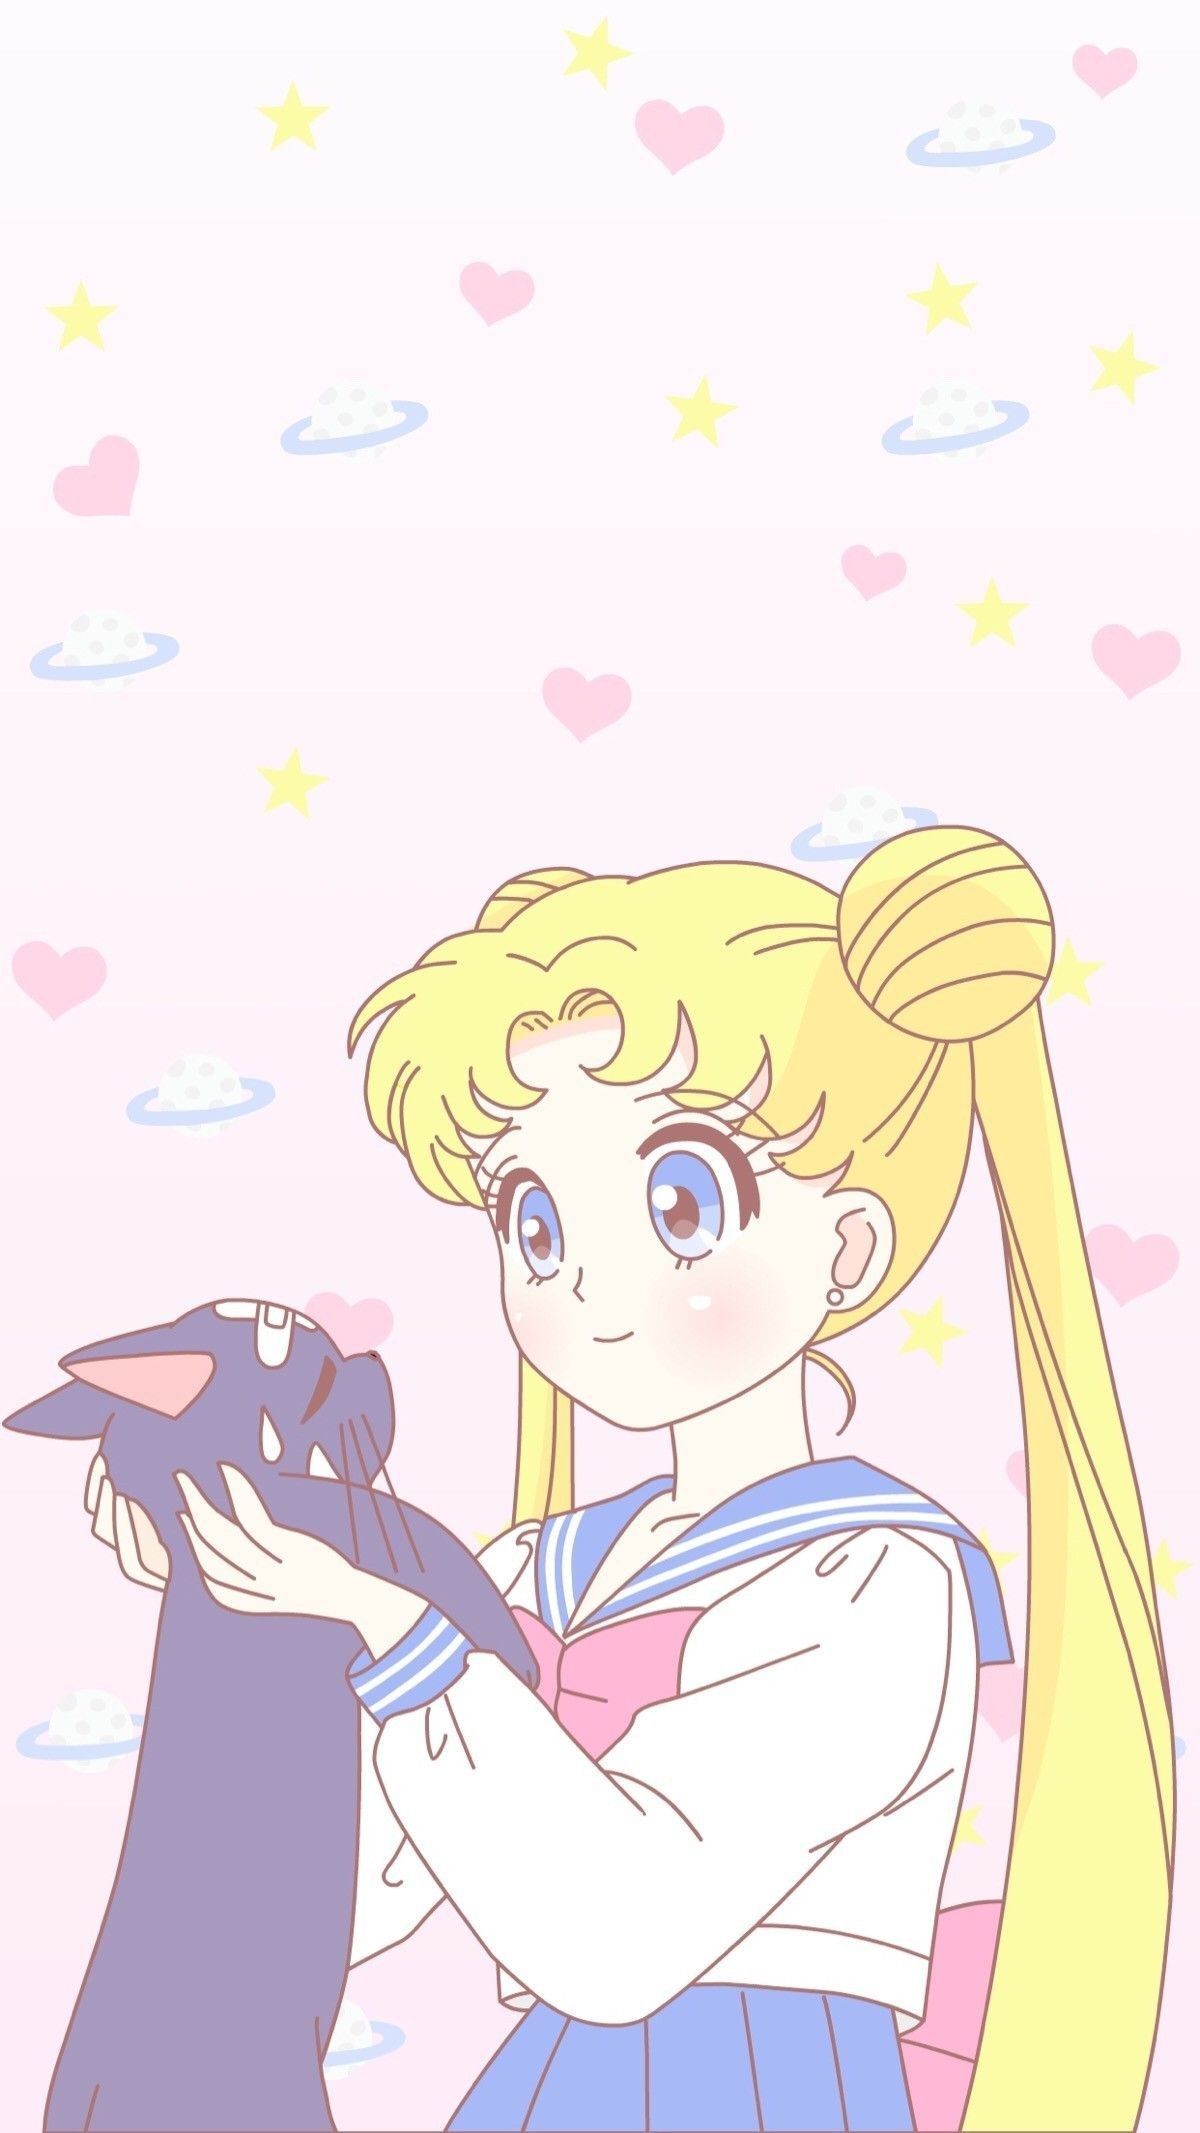 iPhone Aesthetic Lockscreen Sailor Moon Wallpaper. ipcwallpaper. Sailor moon wallpaper, Sailor moon aesthetic, Sailor moon art